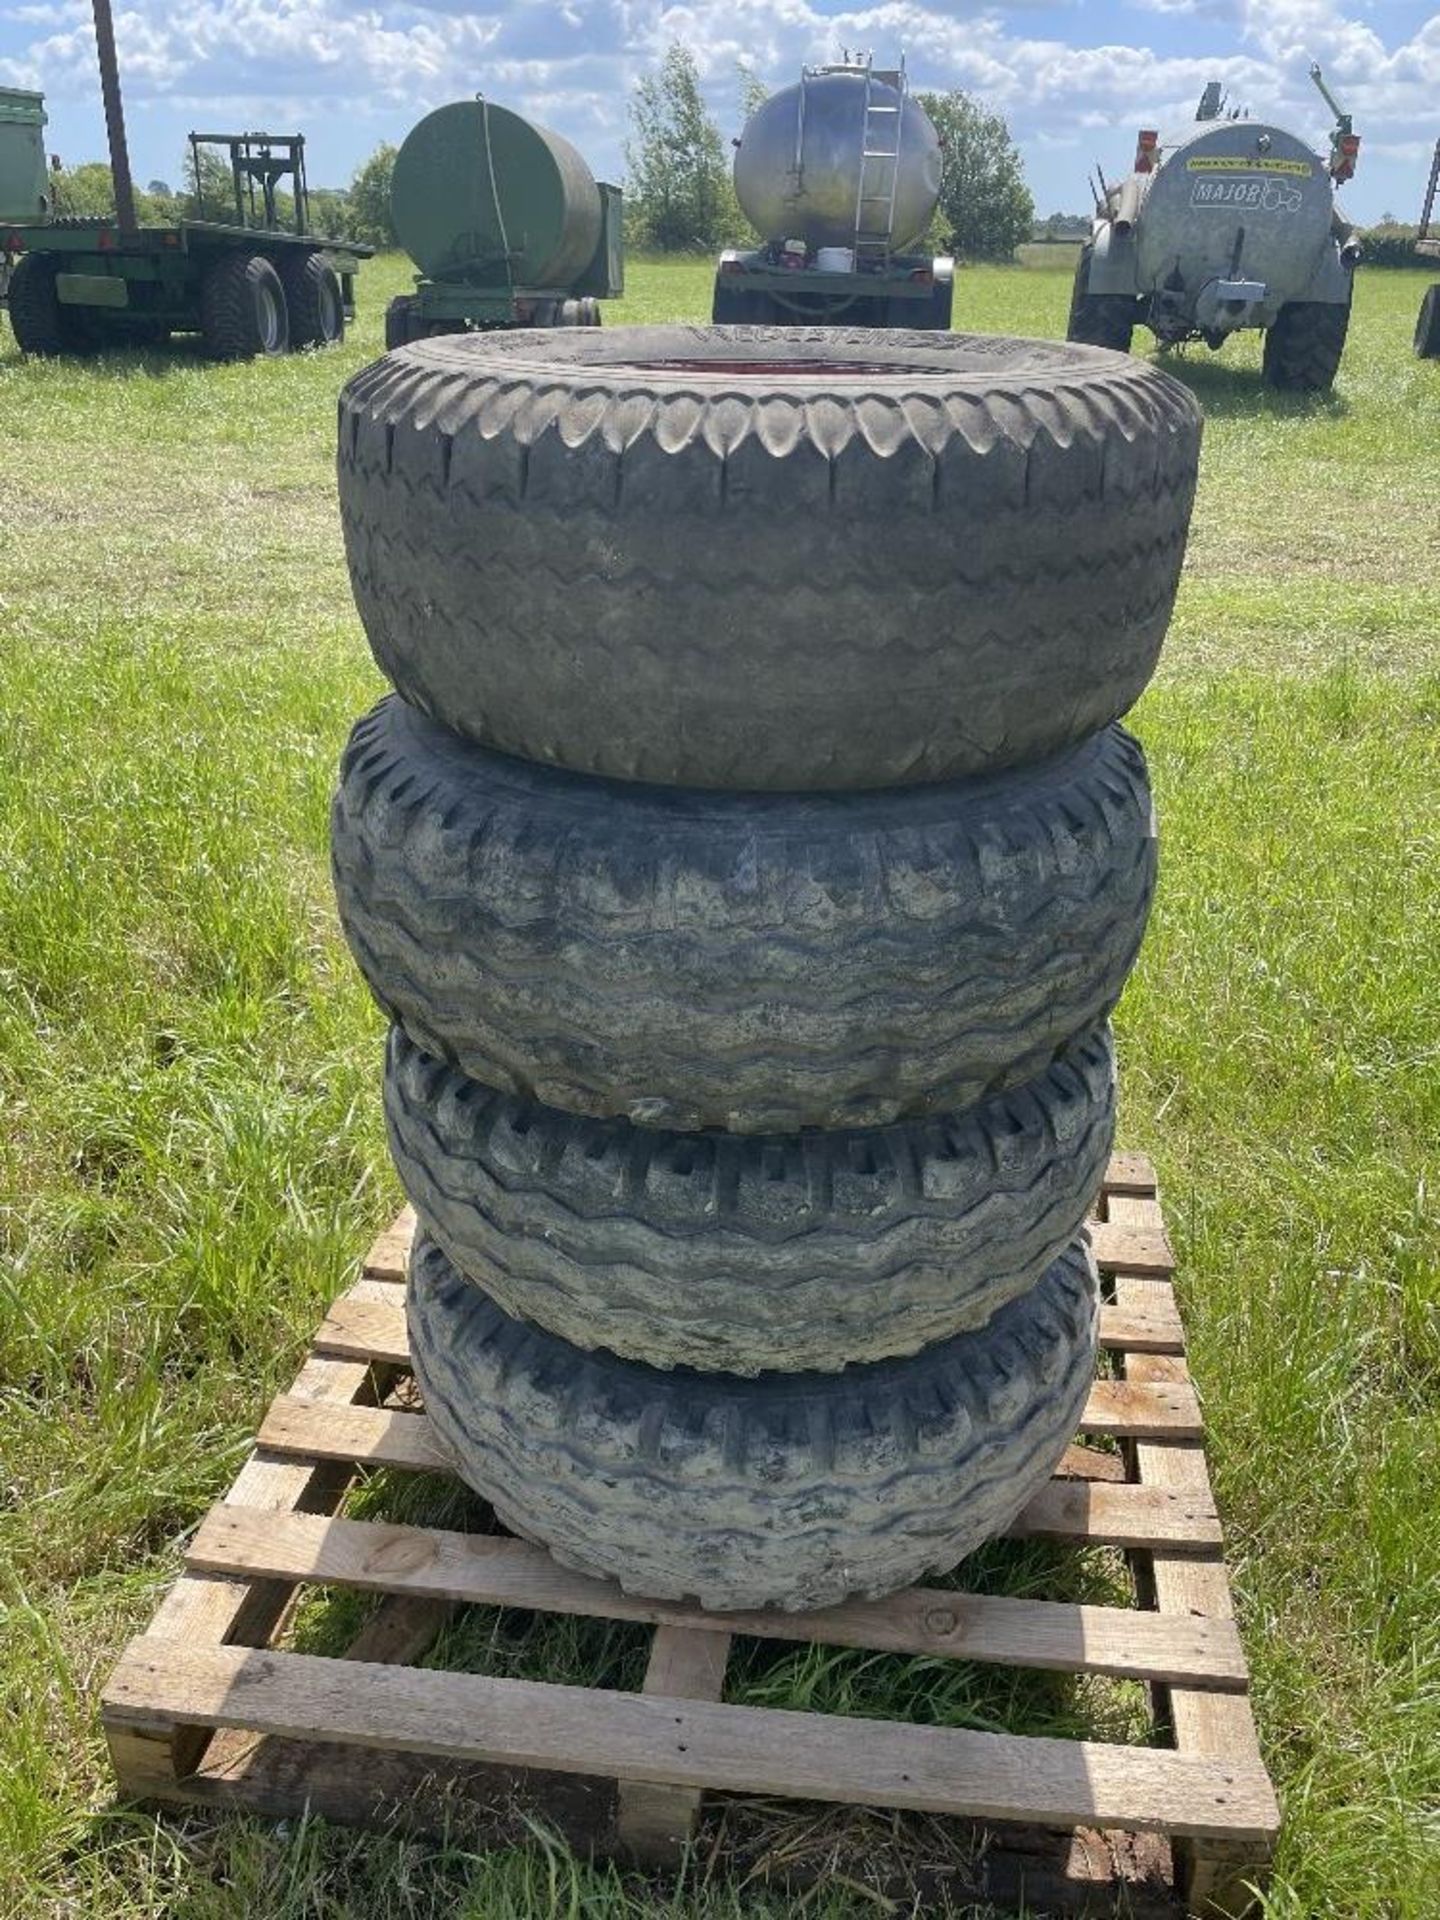 4 x Trailer Tyres - 12.5/80-15.